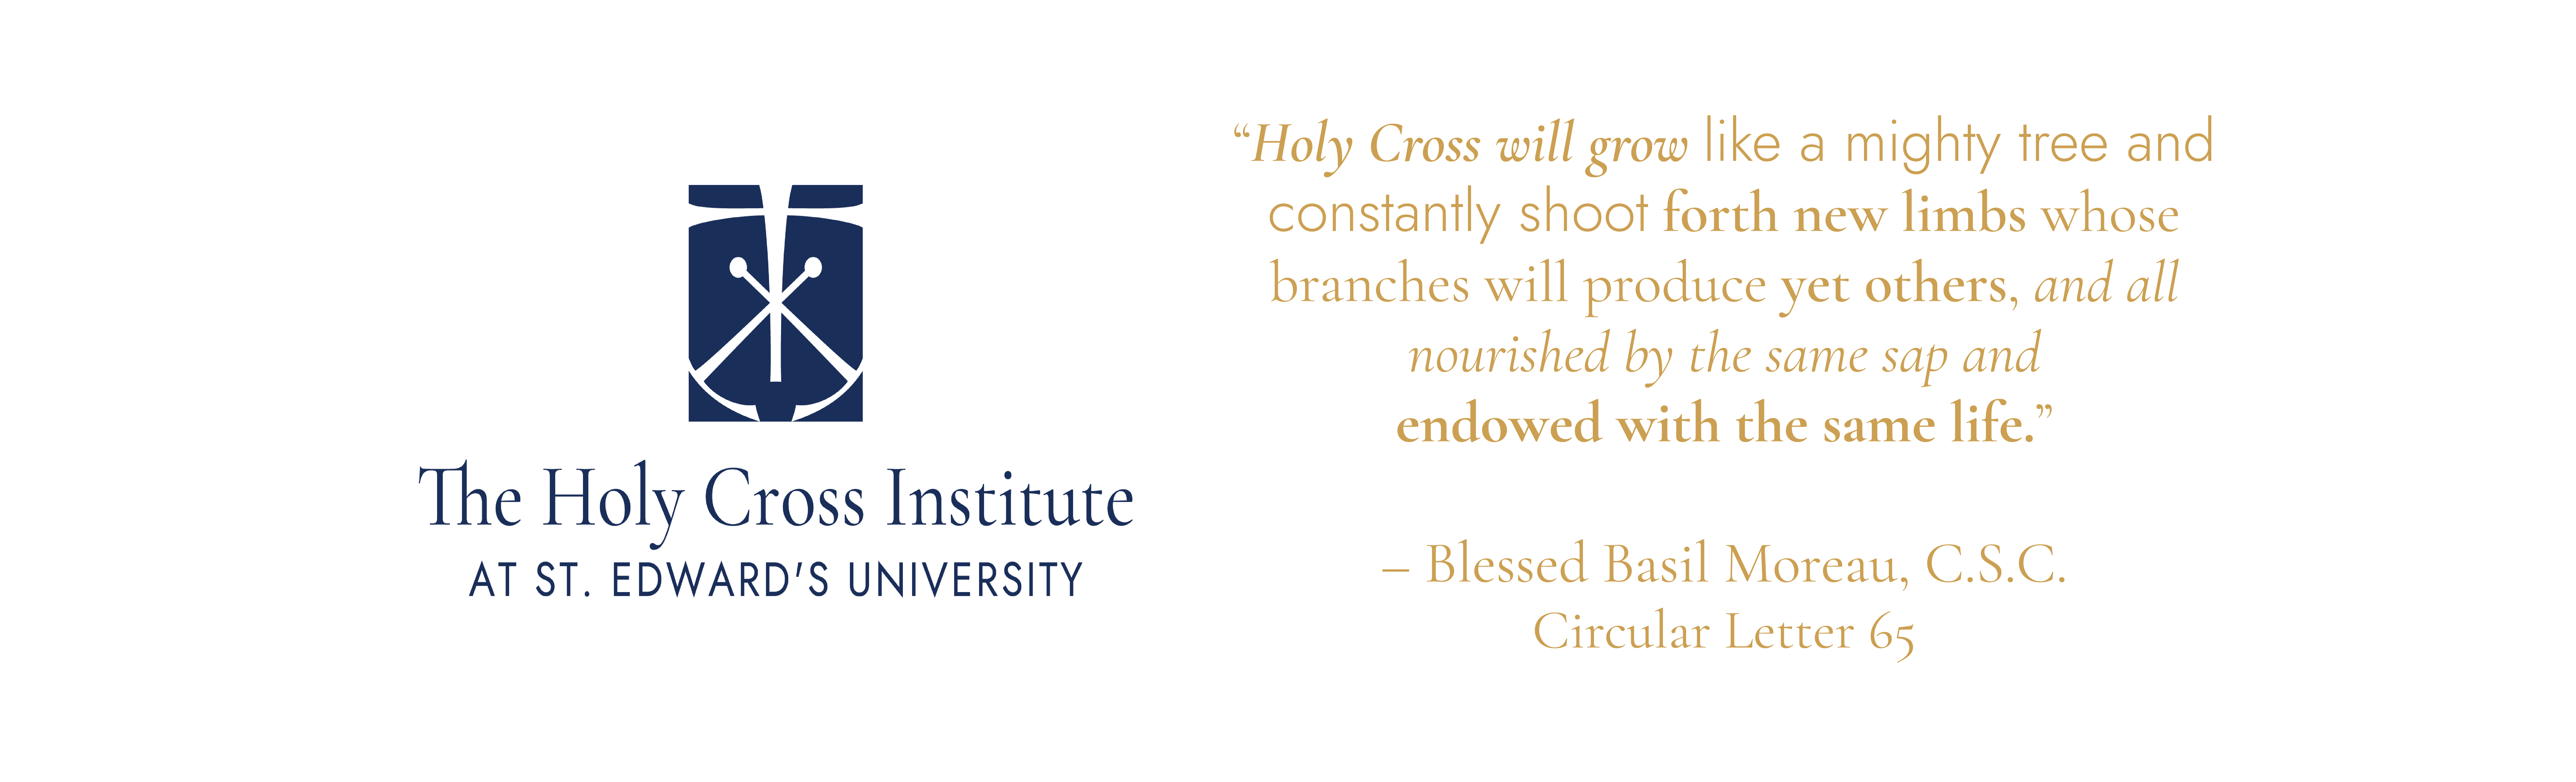 University of Holy Cross